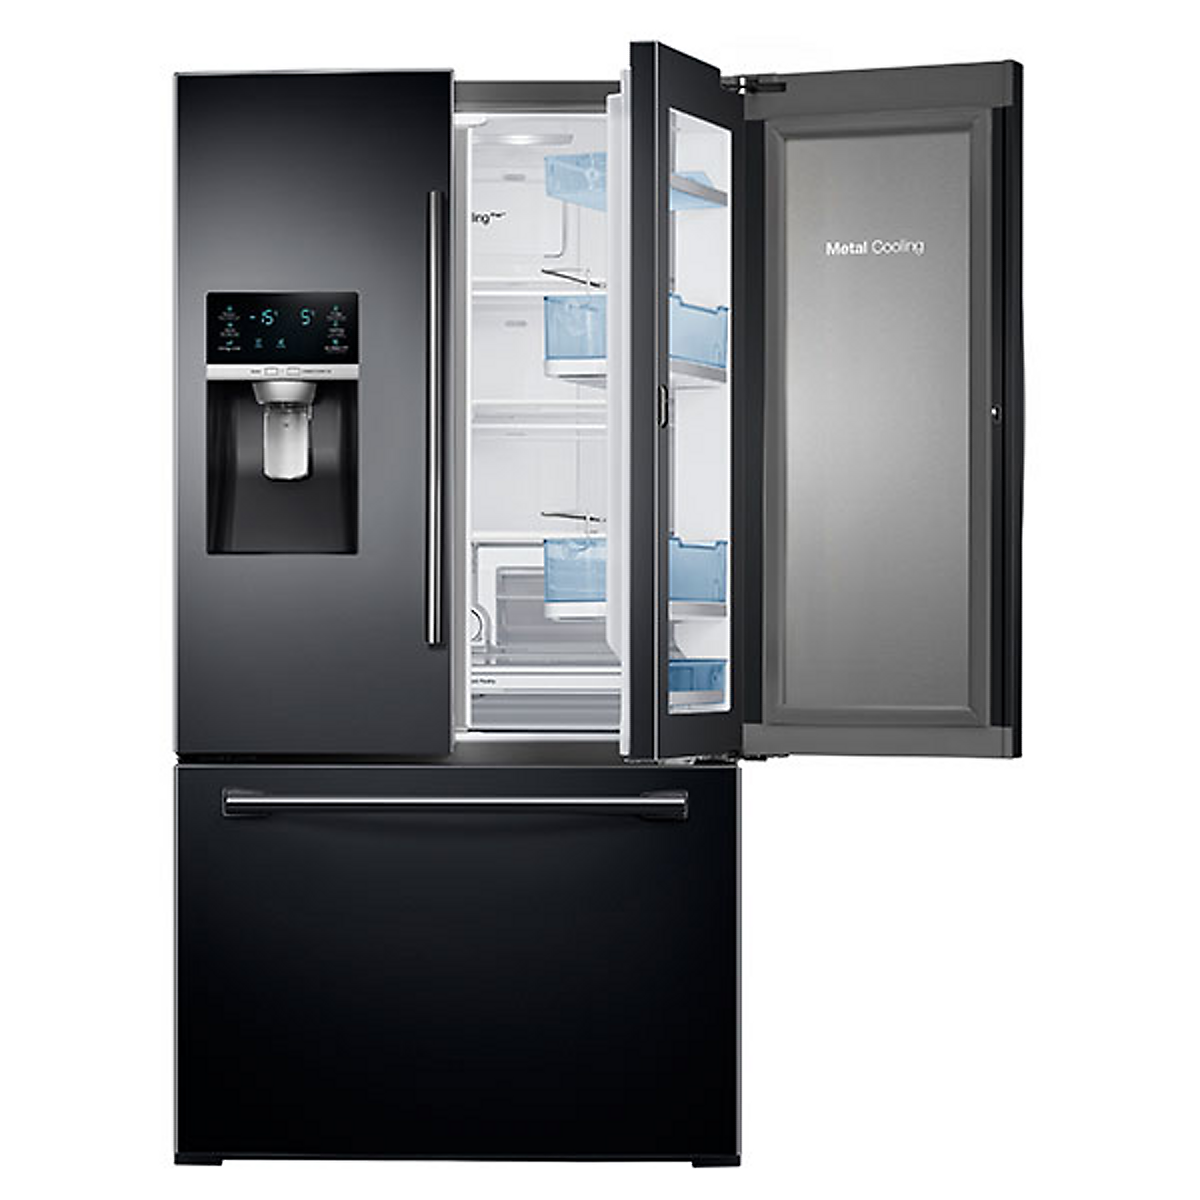 samsung 4 door refrigerator manual